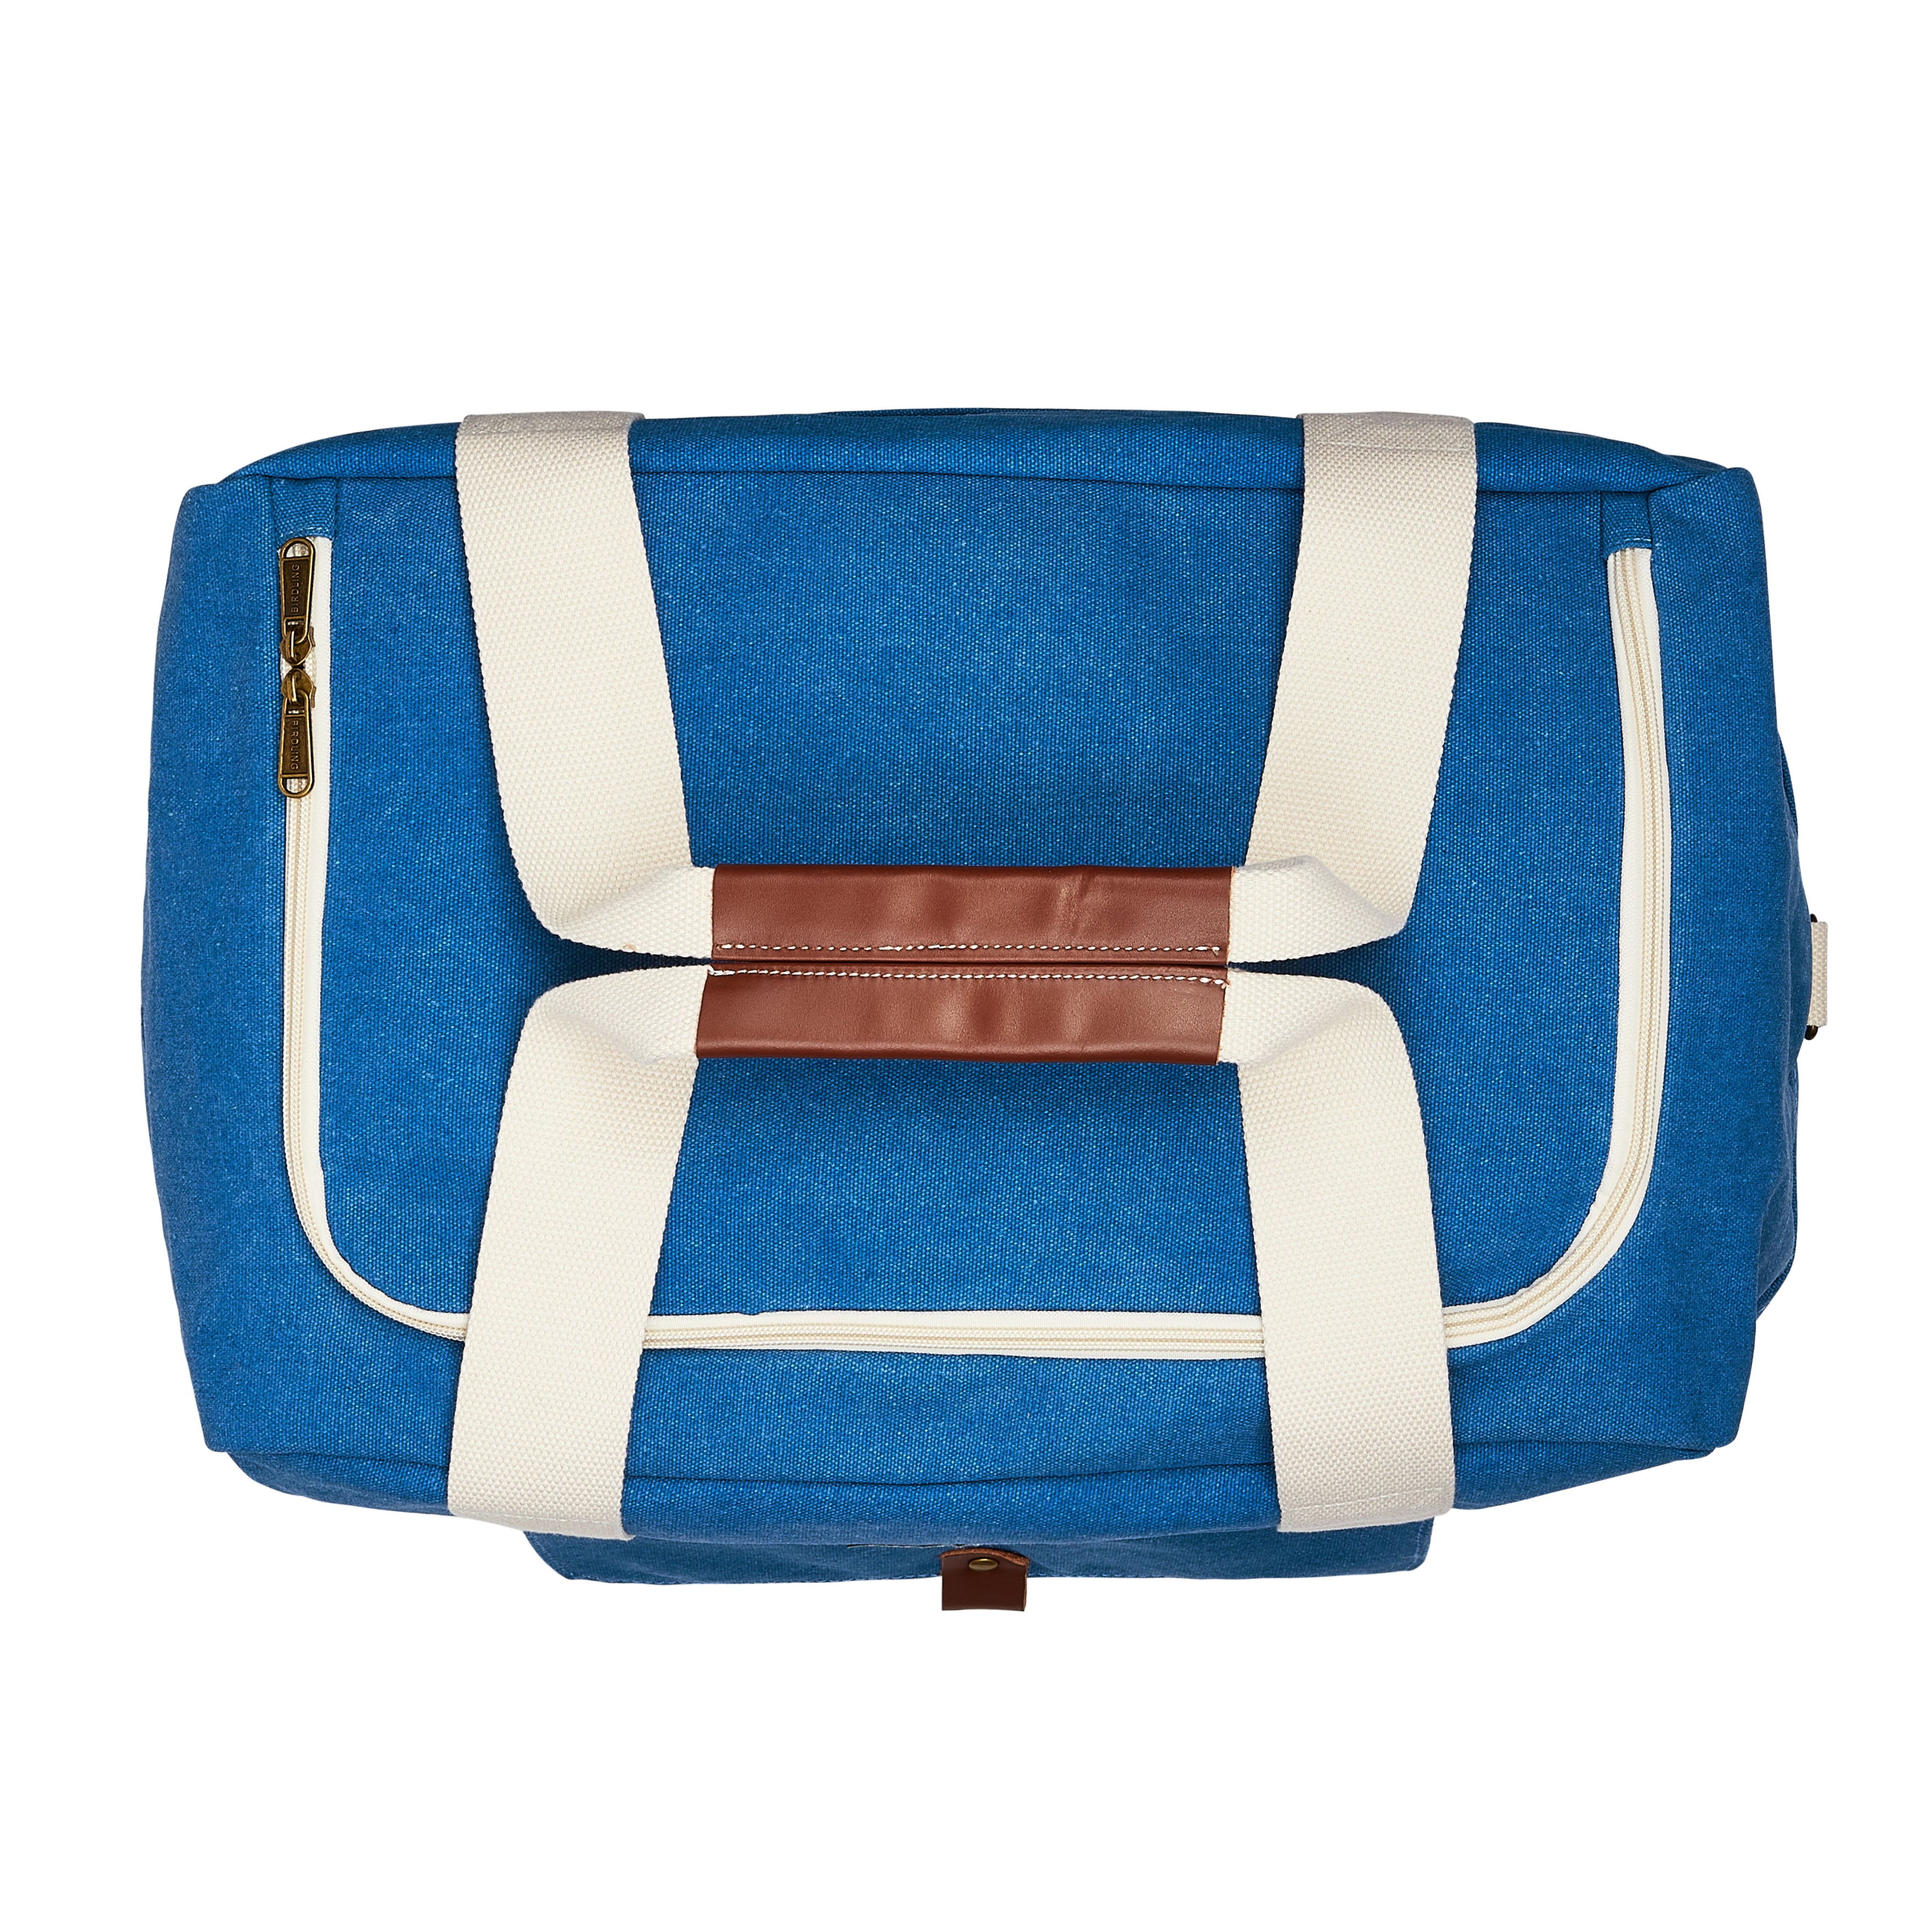 Weekender Travel Bag - Pattern: Merci Beau Blue – SYNPLE